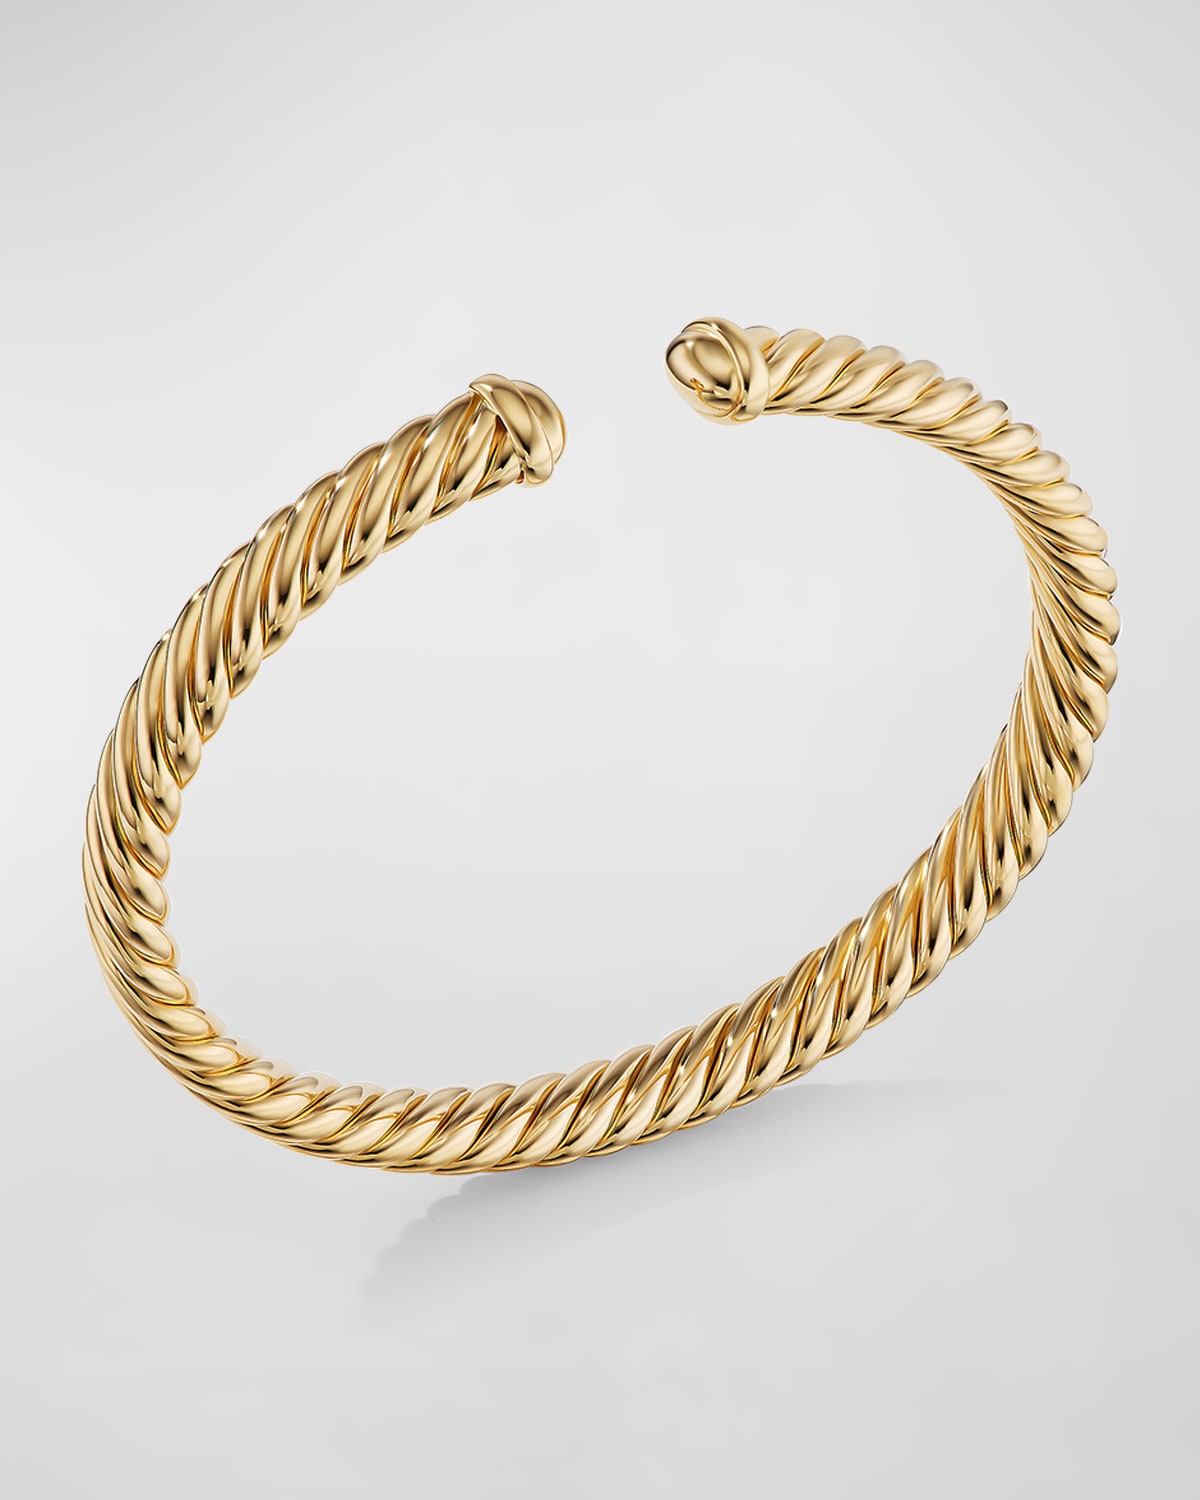 David Yurman Renaissance Cable Bracelet in 18K Rose Gold, 9mm, Size M ...